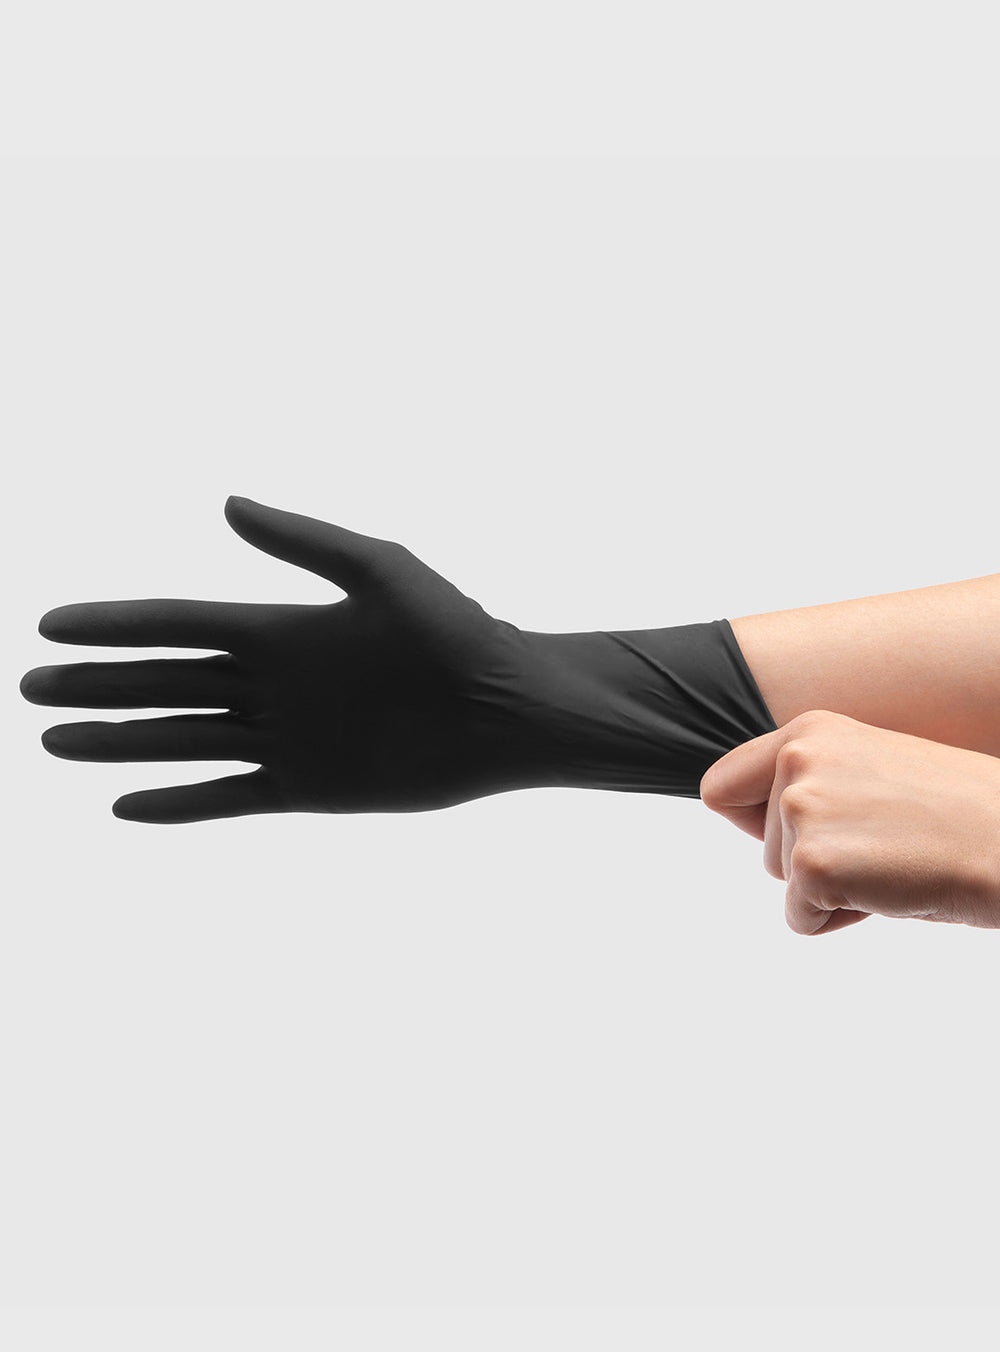 Fromm Reusable Black Latex Gloves - 12 Pack